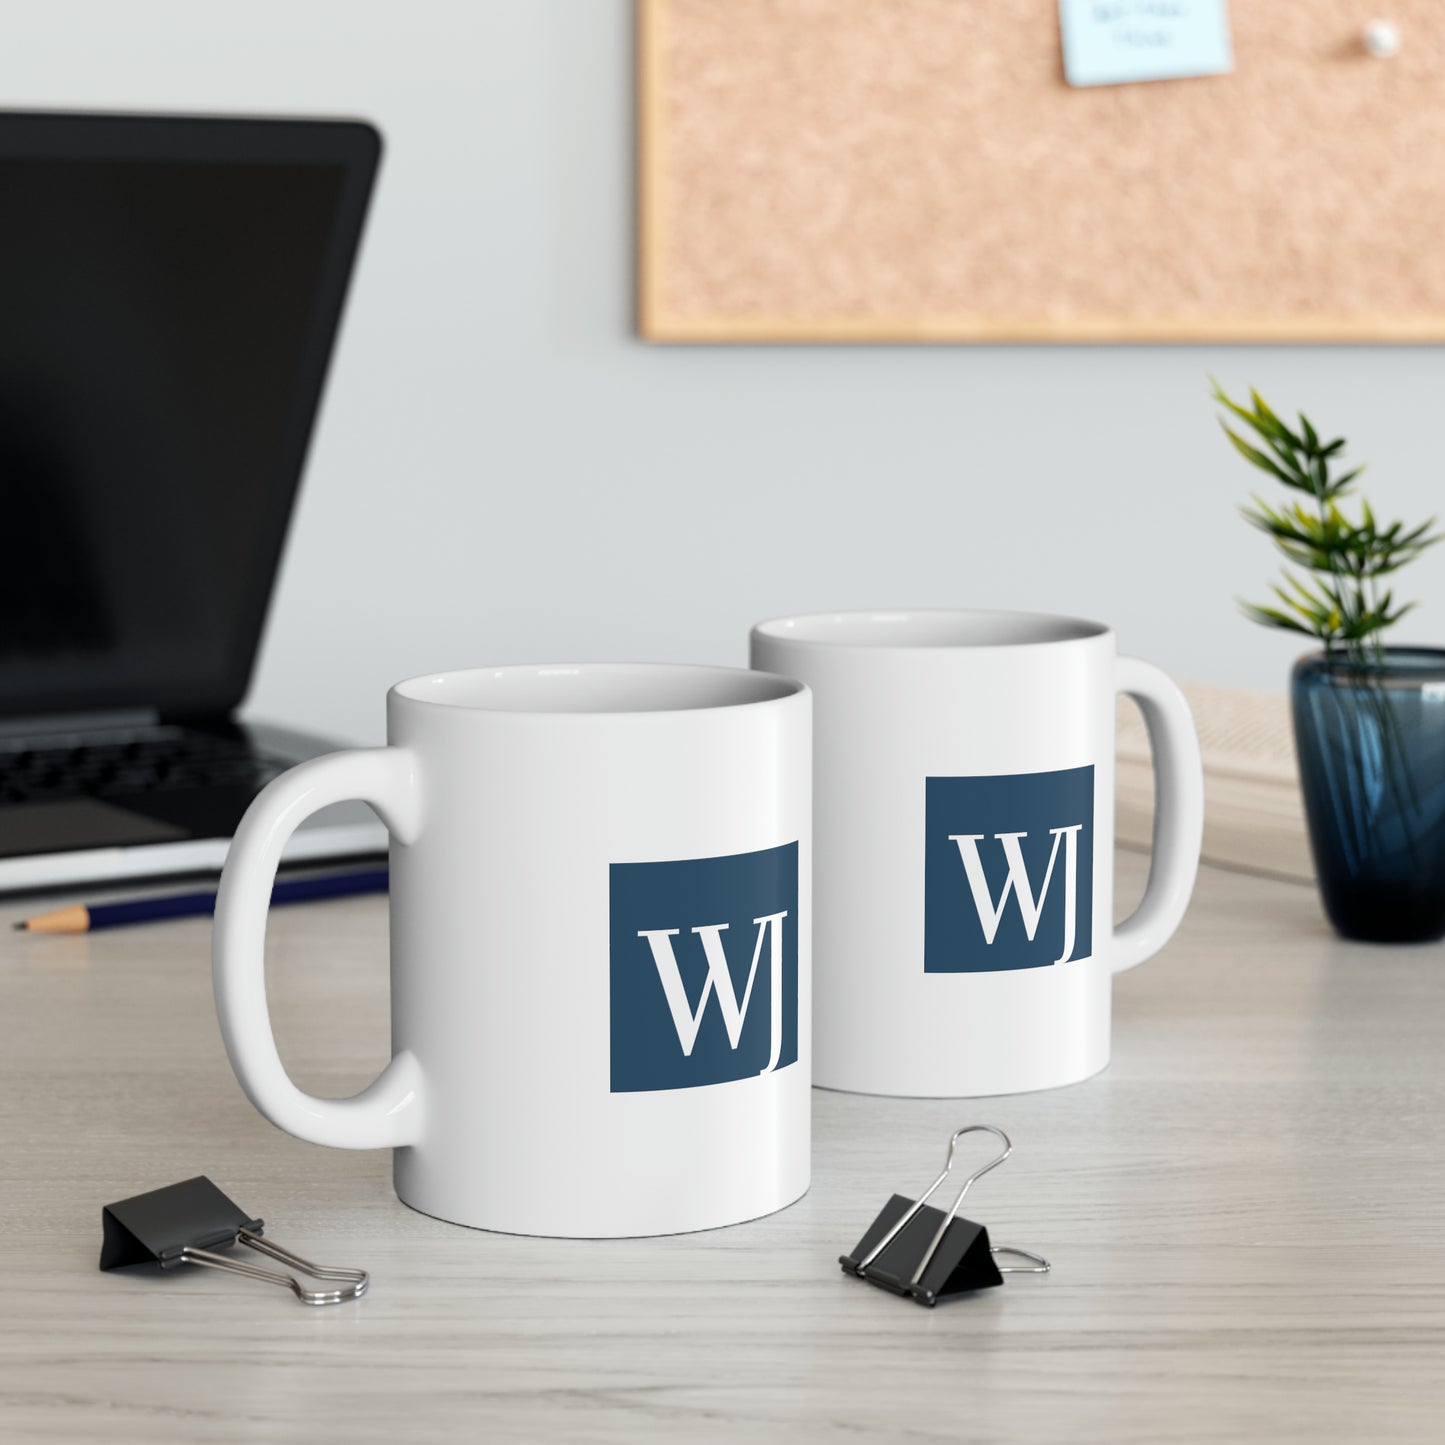 Western Journal "WJ" Logo Mug